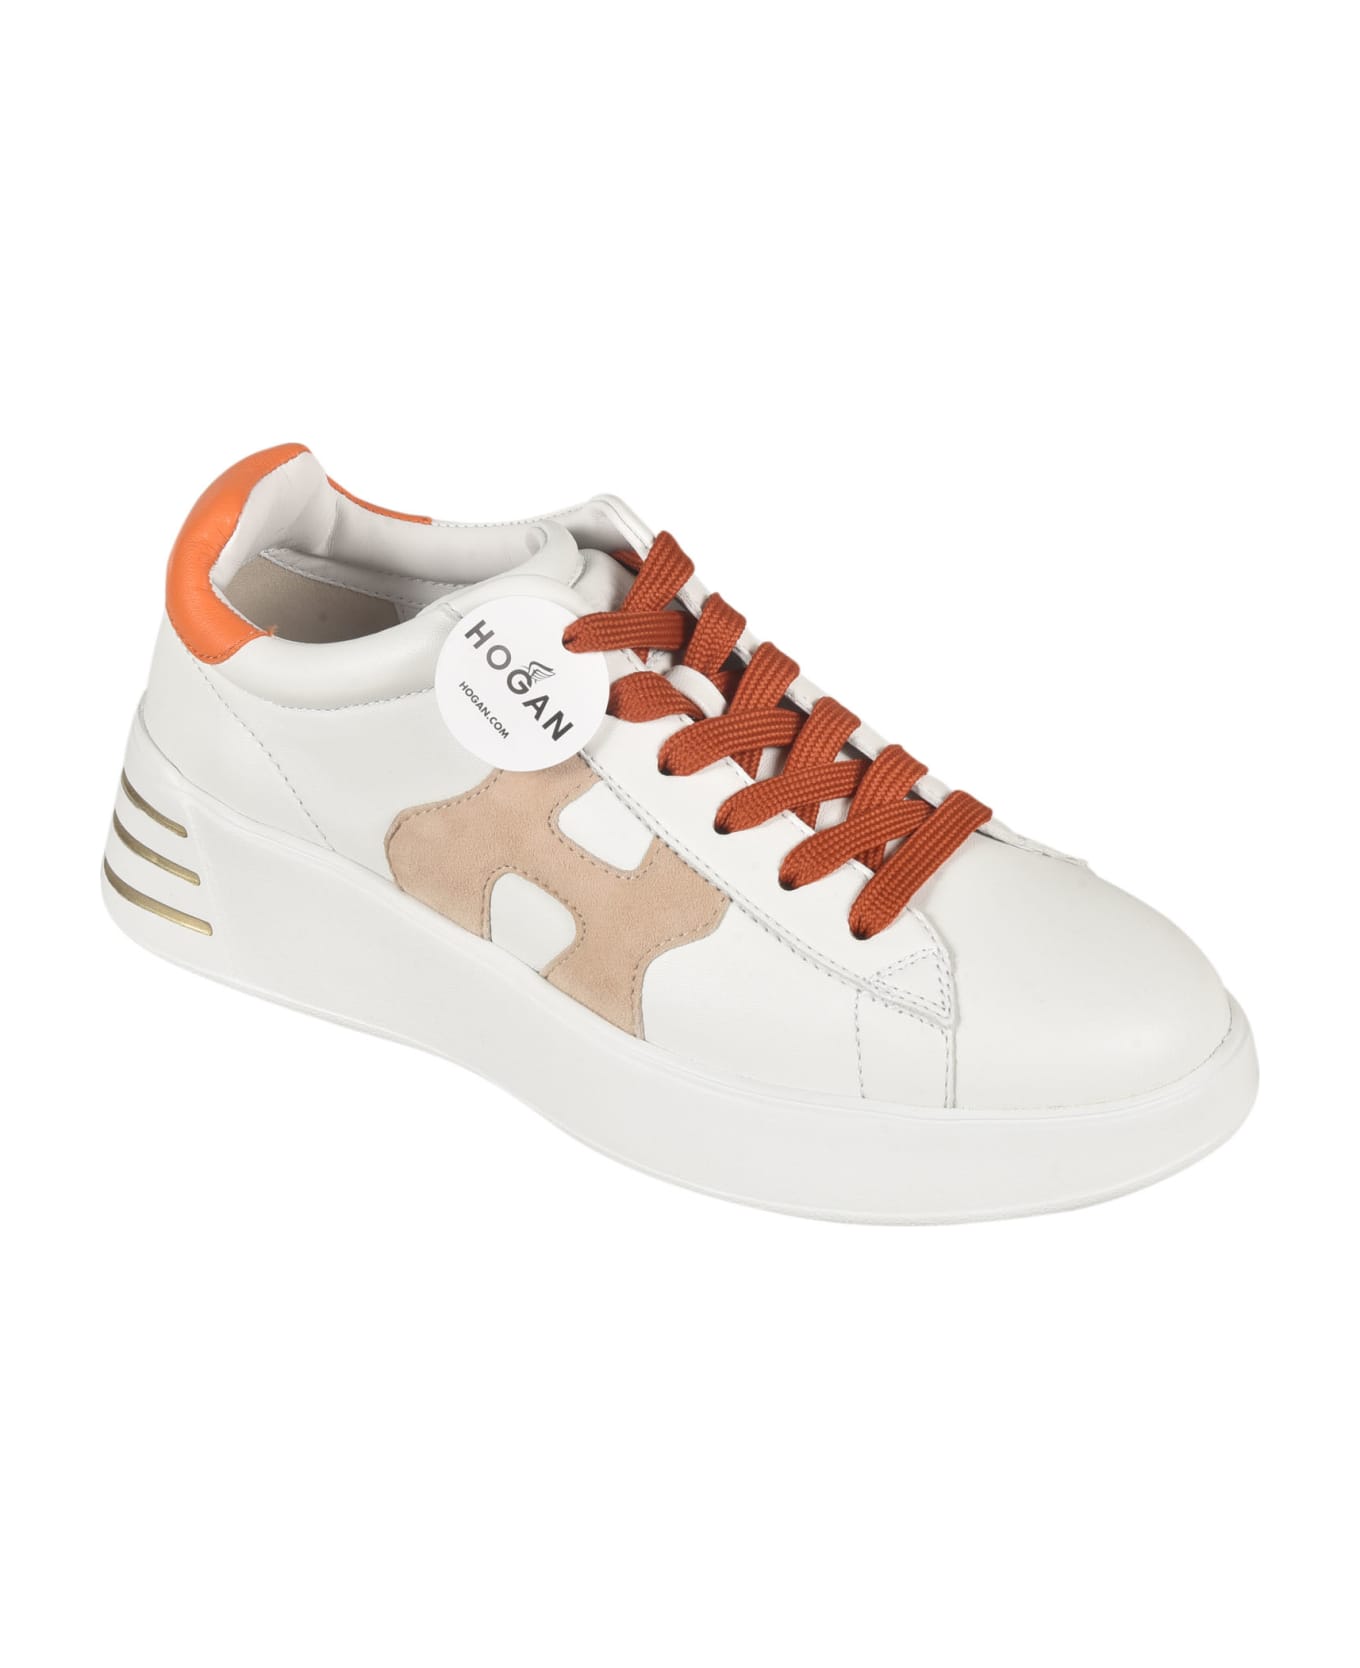 Hogan H564 Rebel Sneakers - White スニーカー